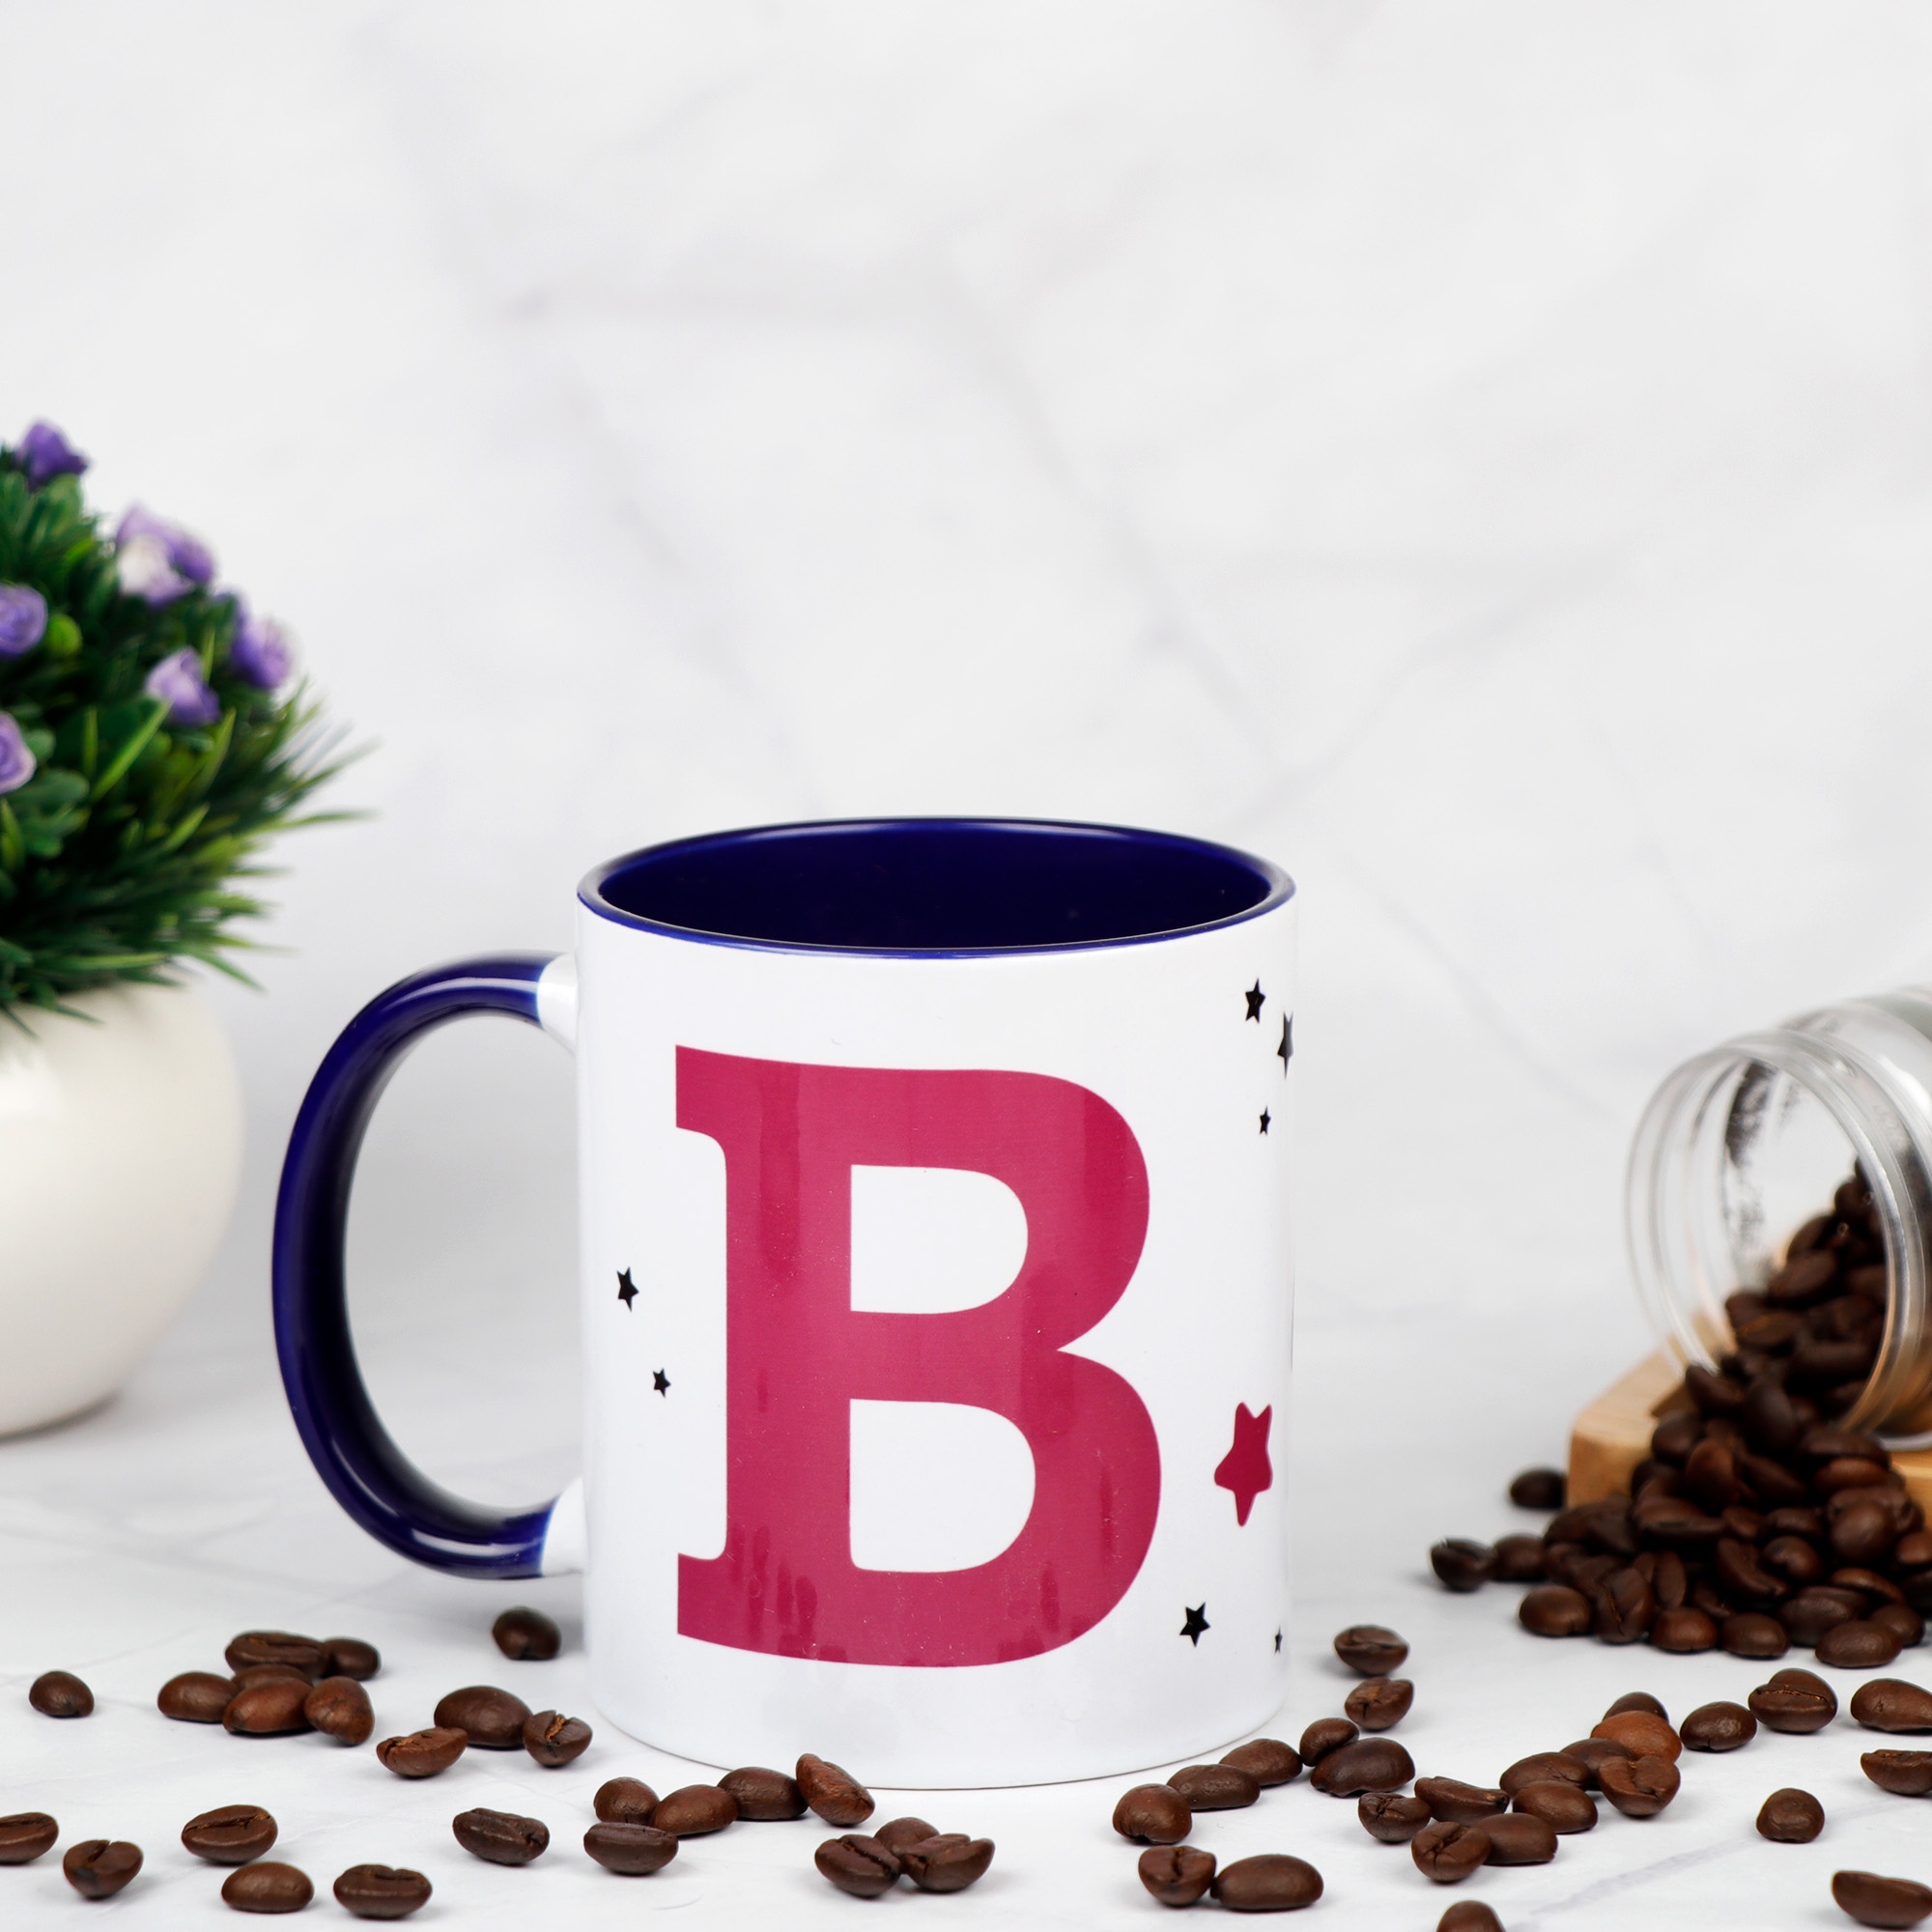 Archies | Archies KEEPSAKE MUG - B-IS FOR MY BIRTHDAY AND CELEBRATIONS Mug Coffee Cup White Printed Ceramic Gift  (12 x 11 x 9) (350 ml)